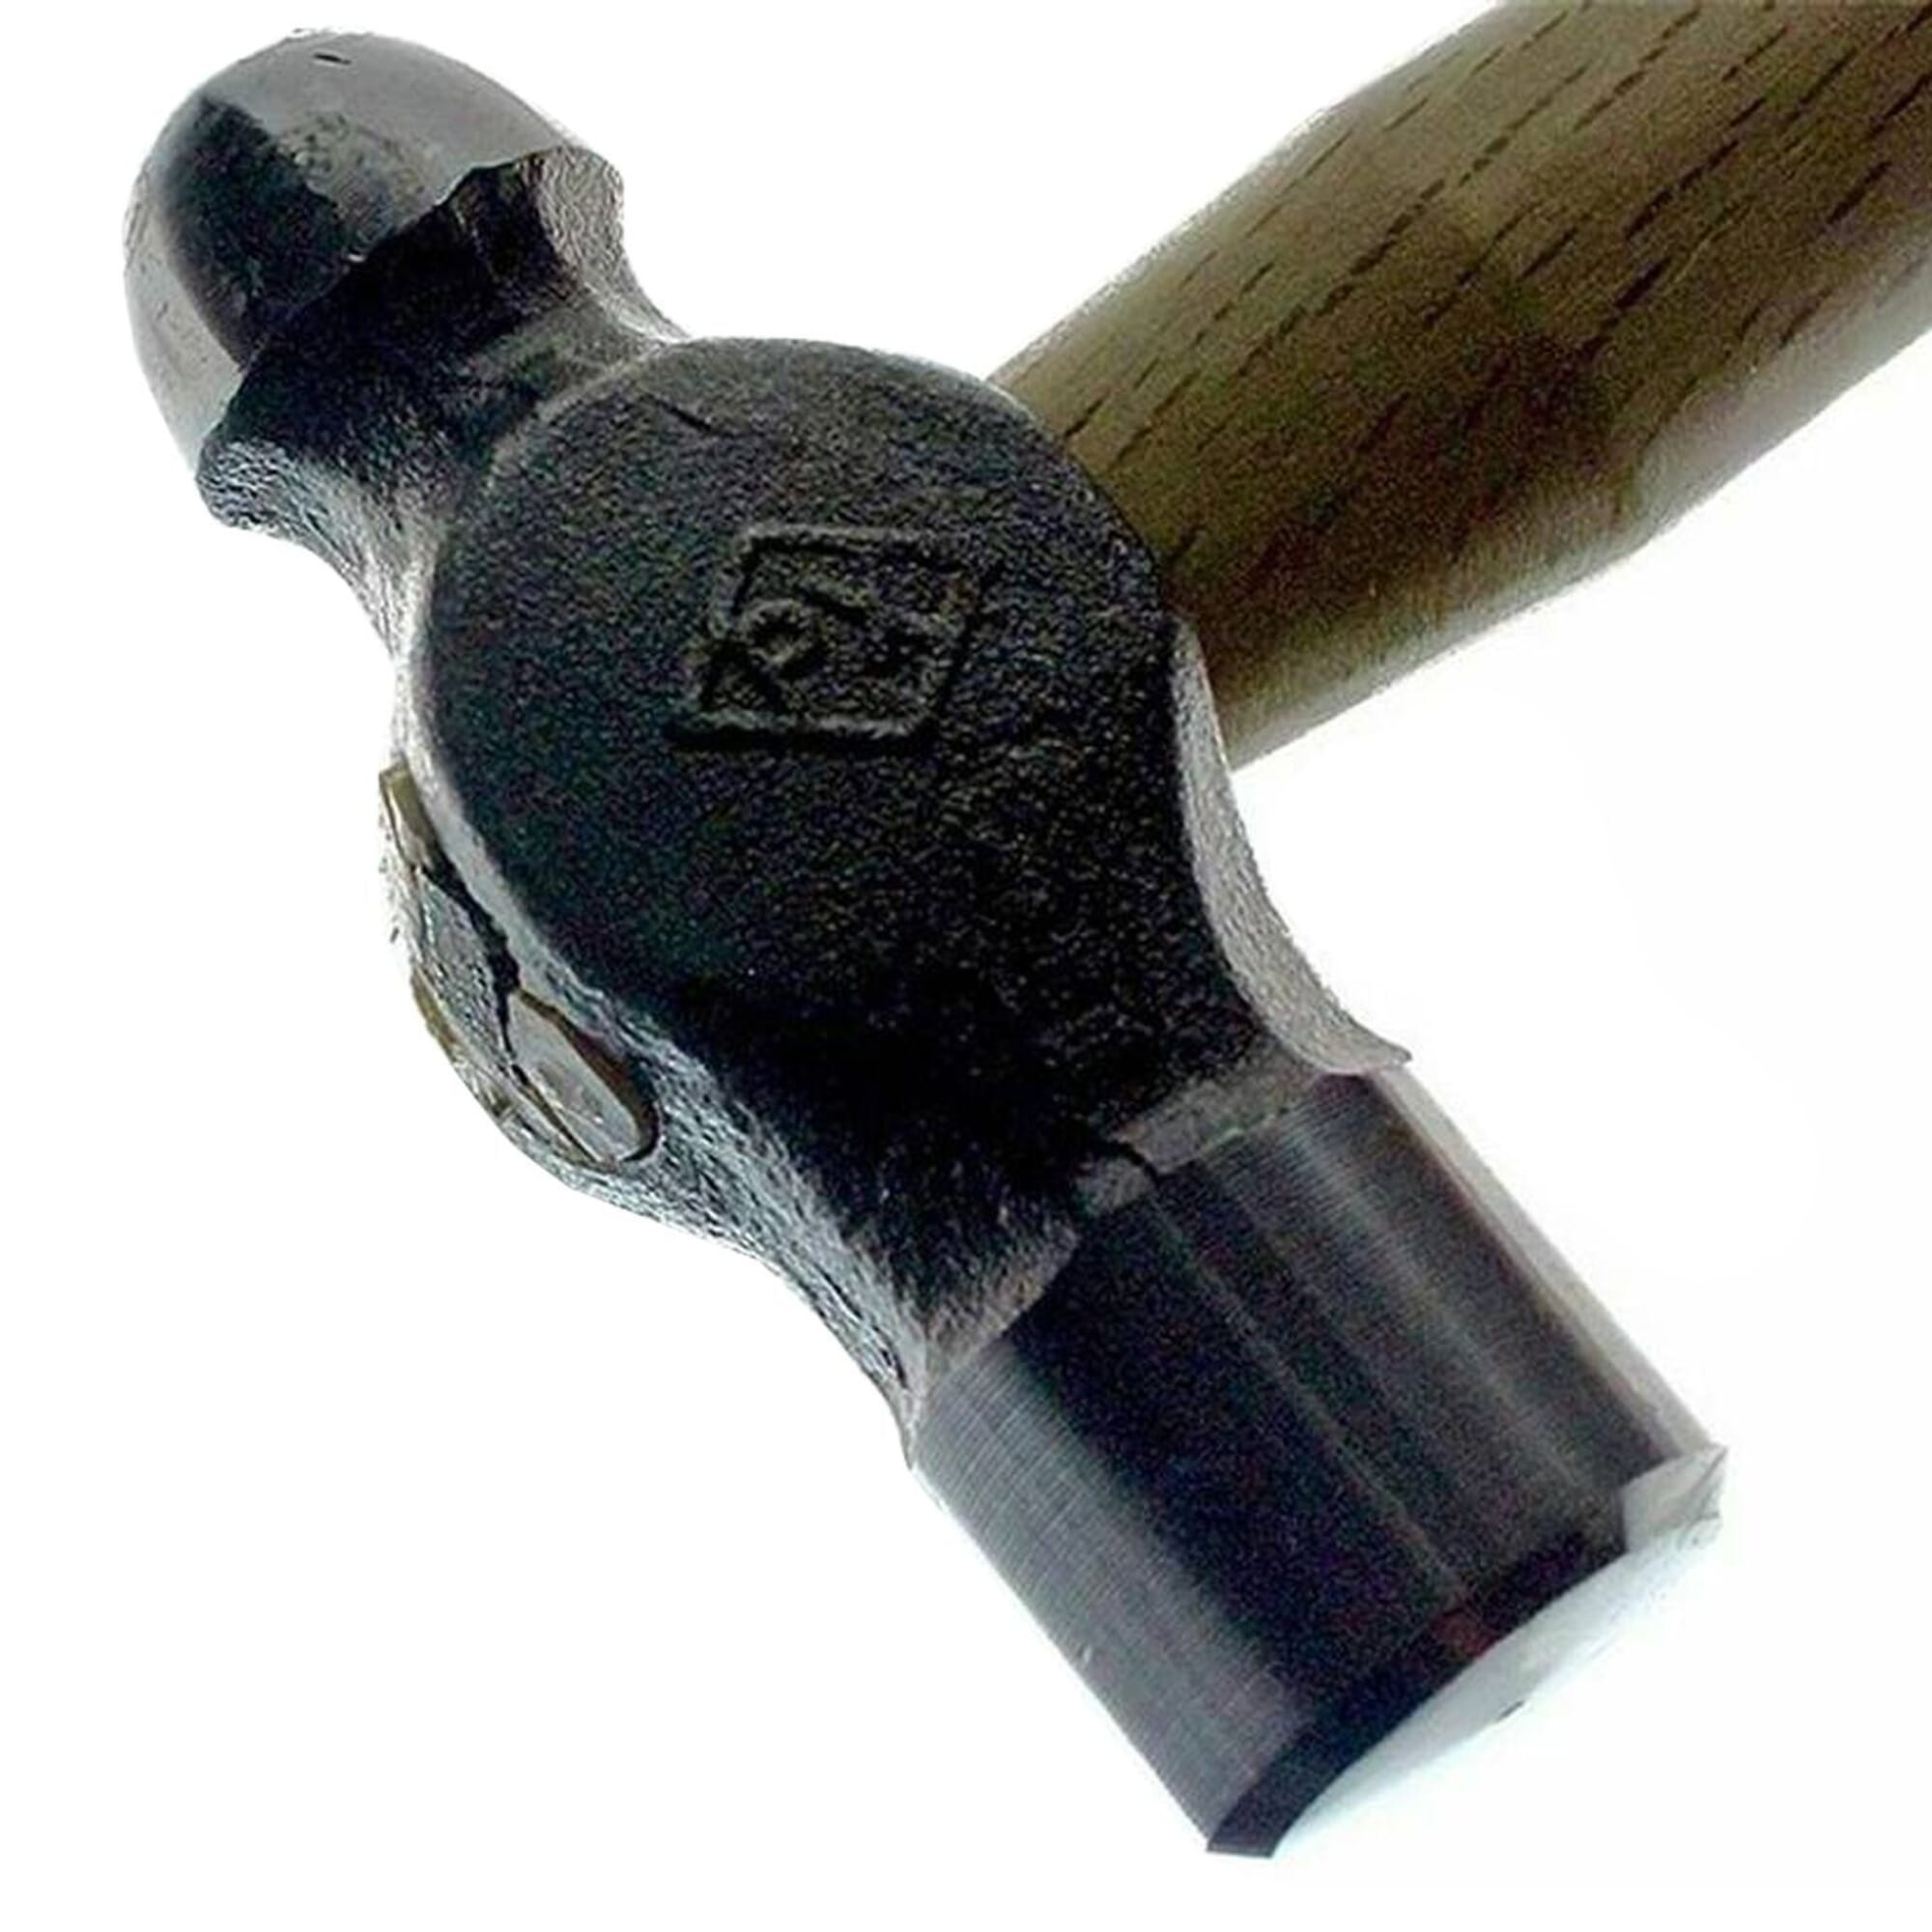 ball pein jeweler's hammer, ball pein, hammer, ball pein hammer, jewelry  tool, jewelry making tool, 8